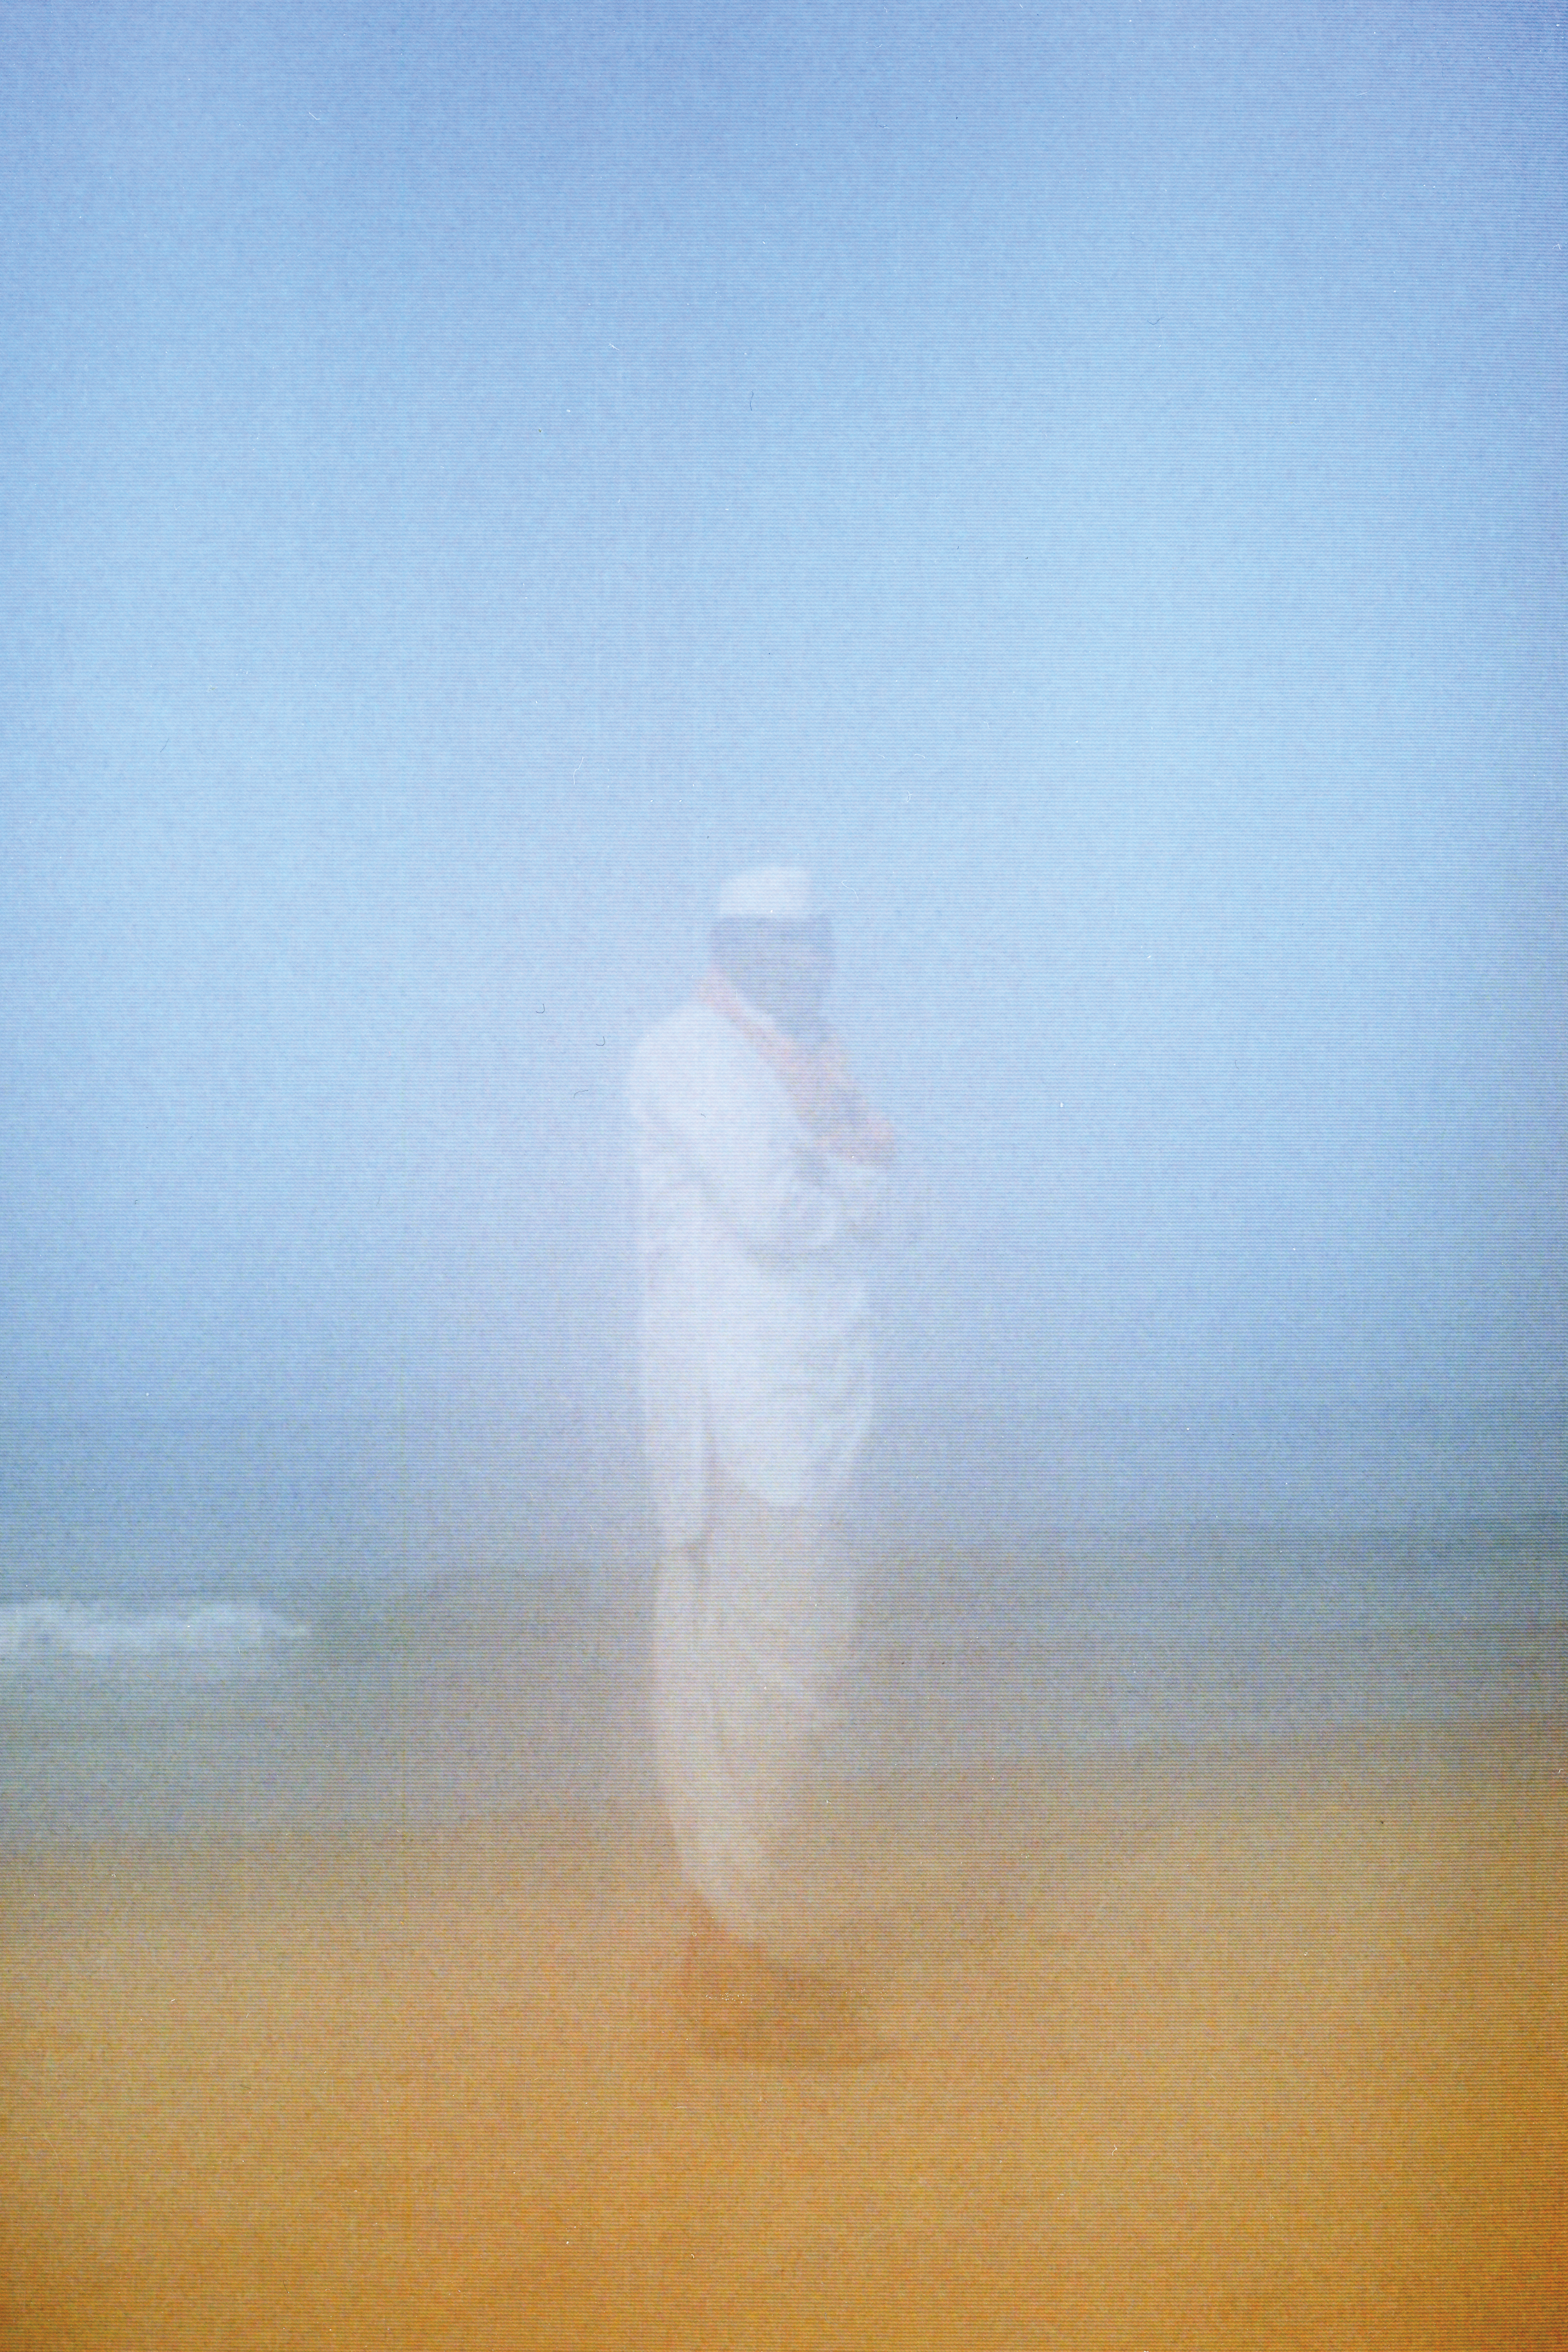 Man on the beach , Karnataka, India 2013